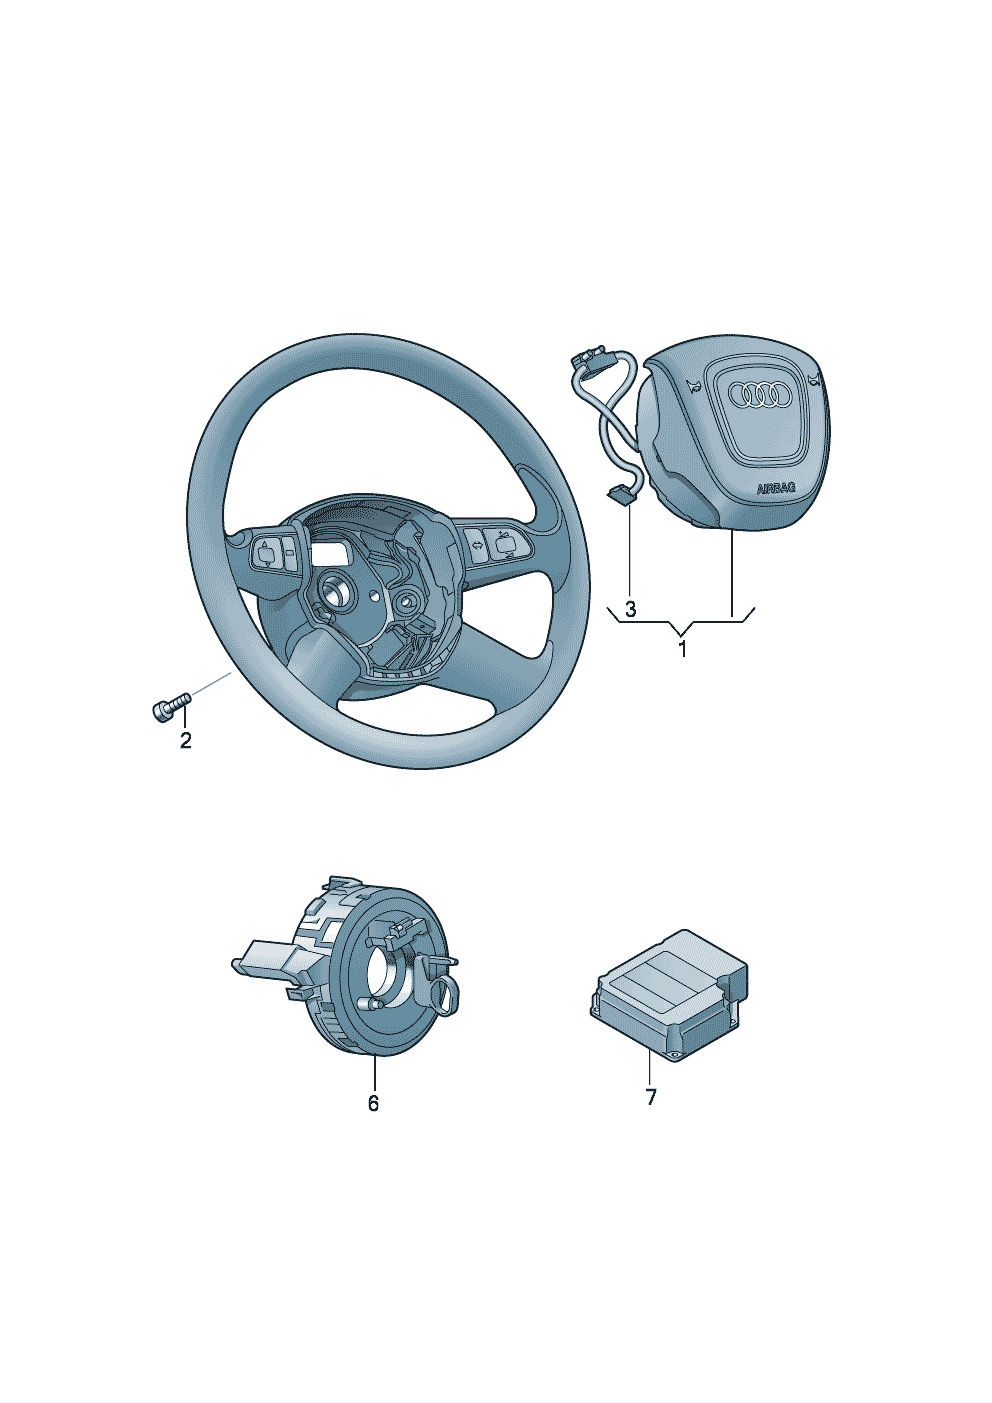 airbag unit for steering wheel<br/><br/><br/><br/><br/> Caution Hazardous <br/><br/><br/><br/><br/><br/>see workshop manual  - Audi A8/S8 quattro - a8q